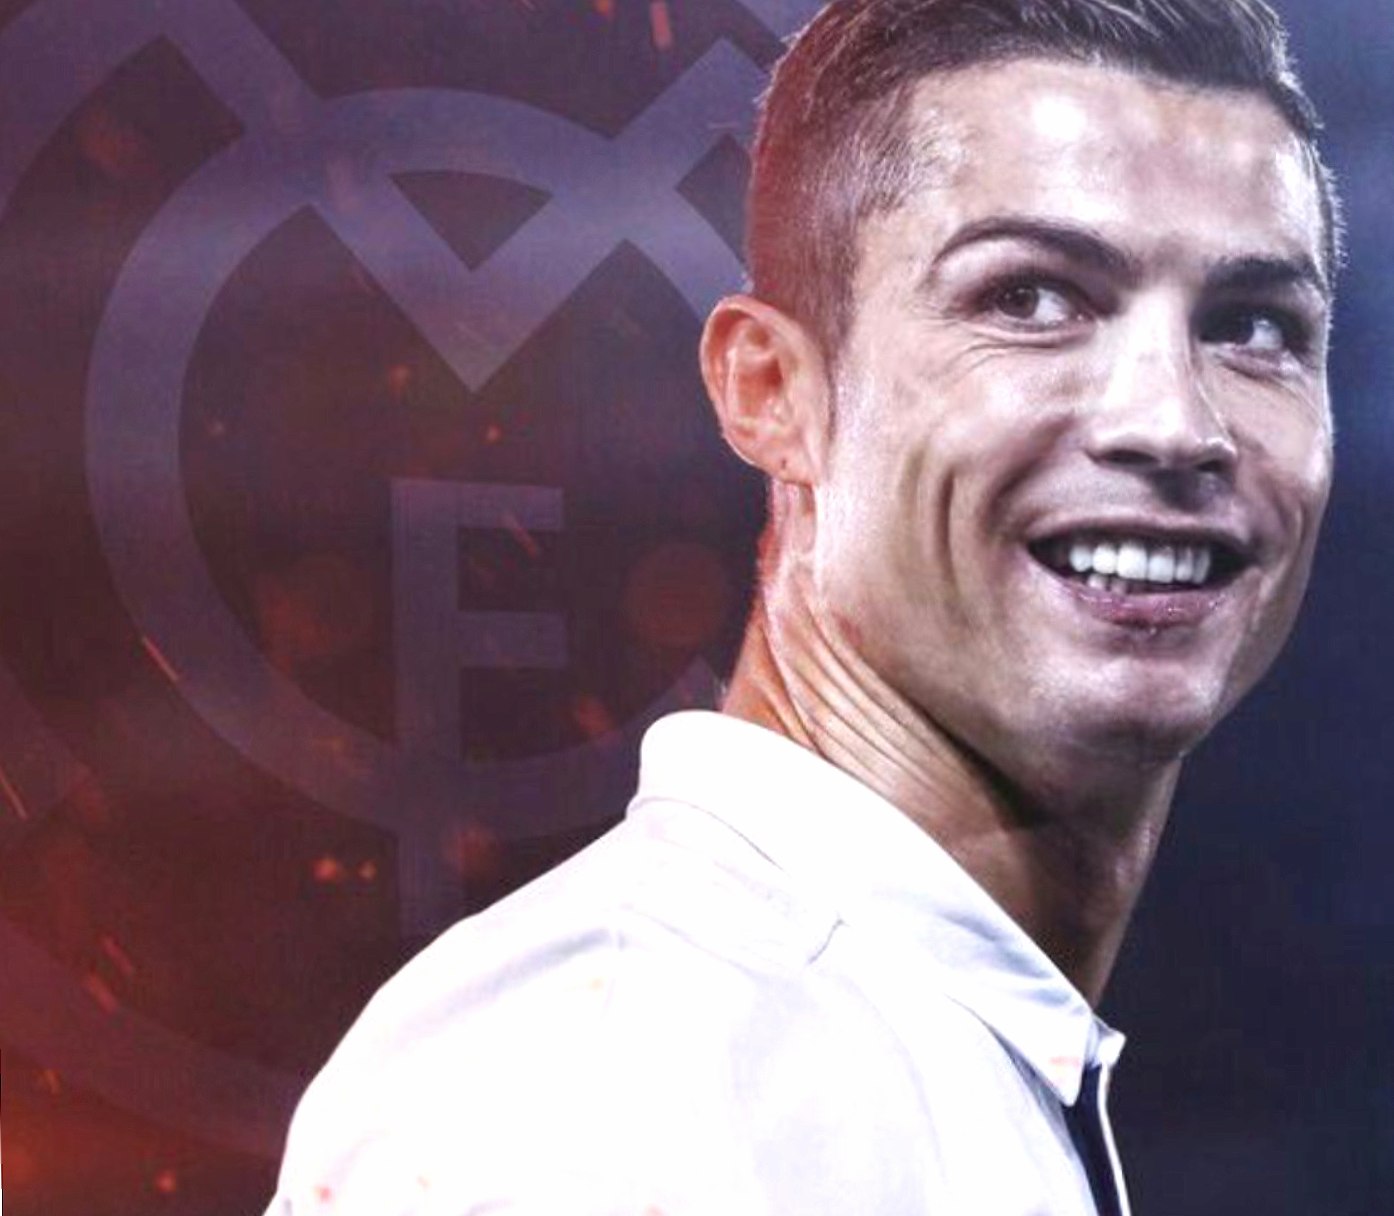 Ronaldo real madrid at 1024 x 1024 iPad size wallpapers HD quality